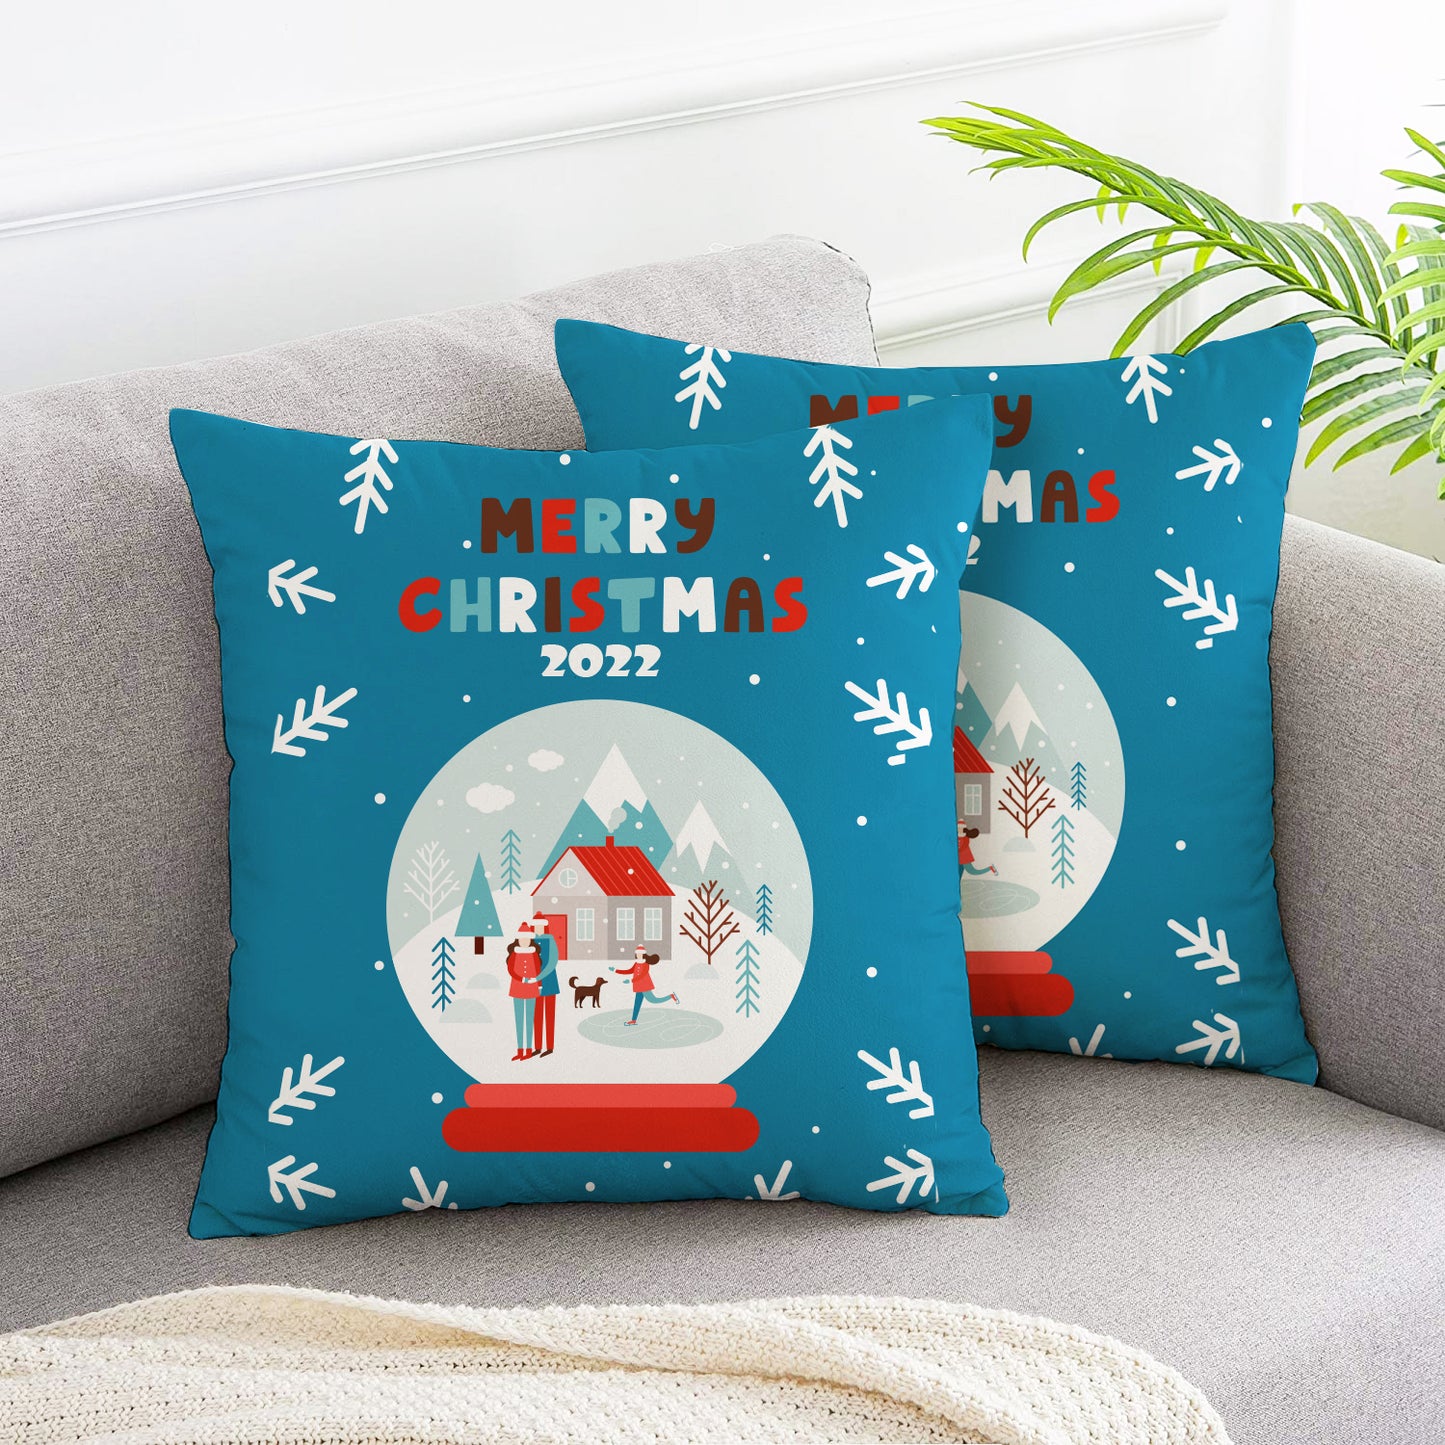 Sweet Home Christmas Celebration pillow covers 2pcs